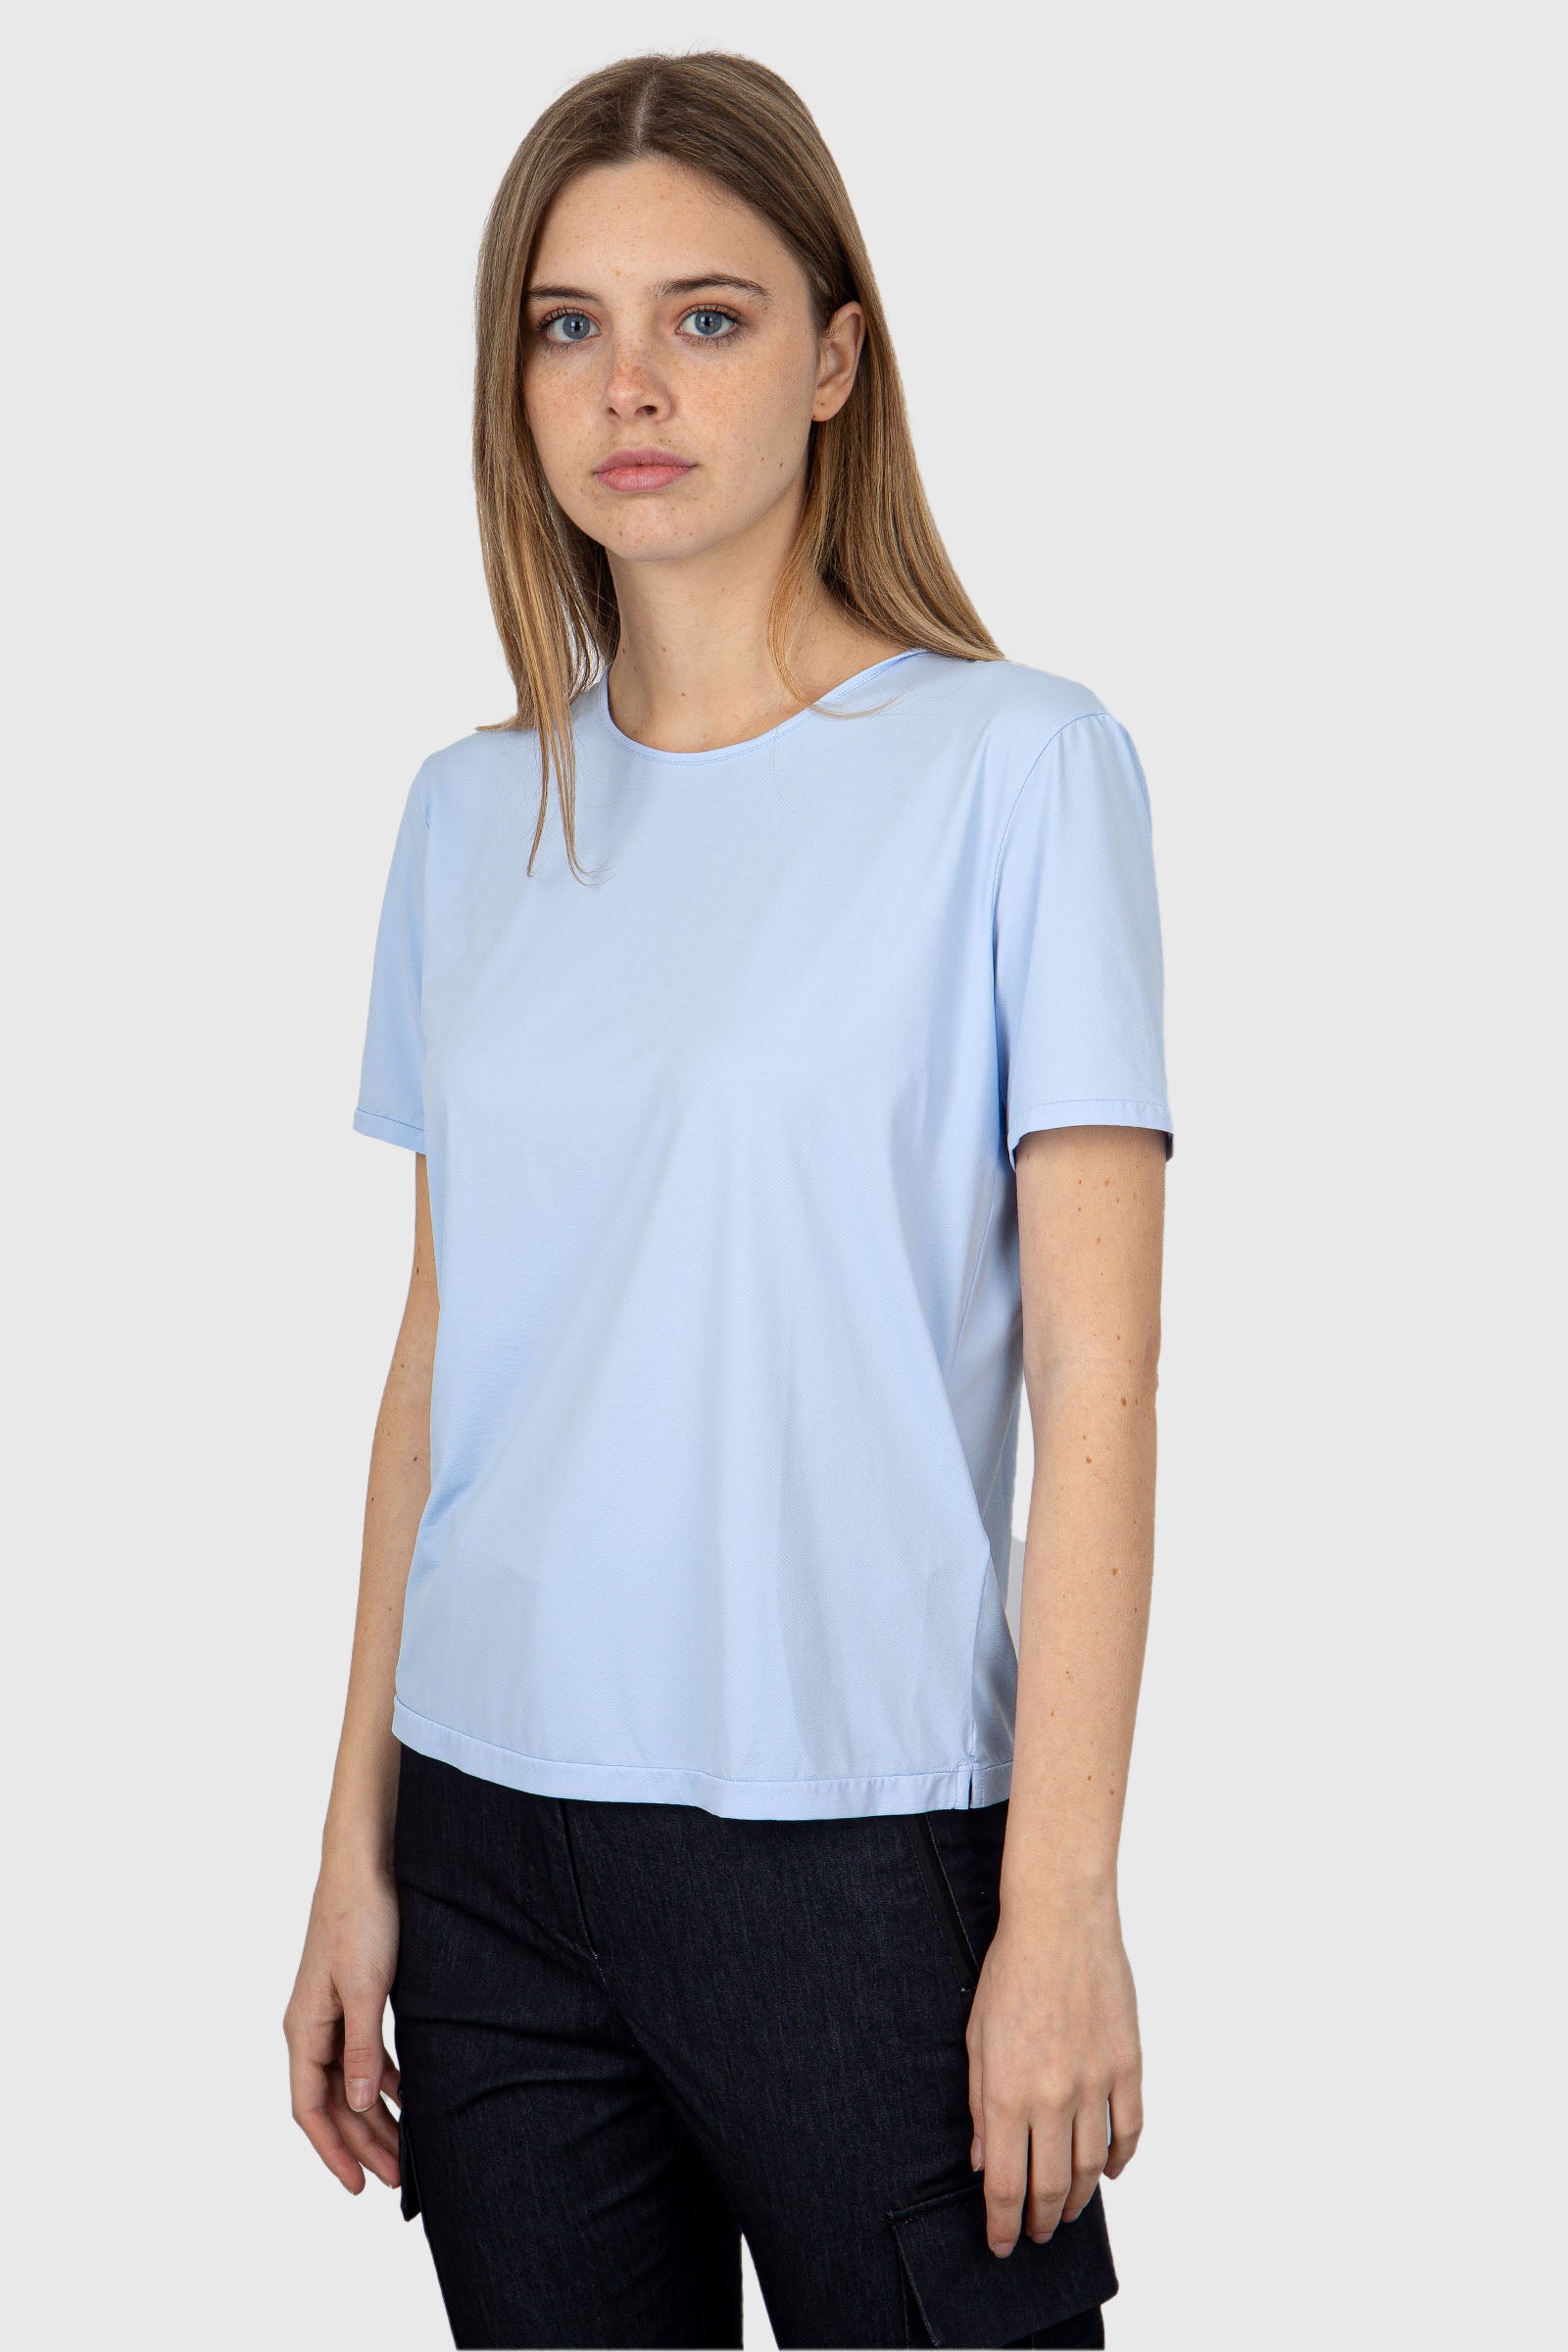 RRD Synthetic Oxford Light Blue T-Shirt - 3